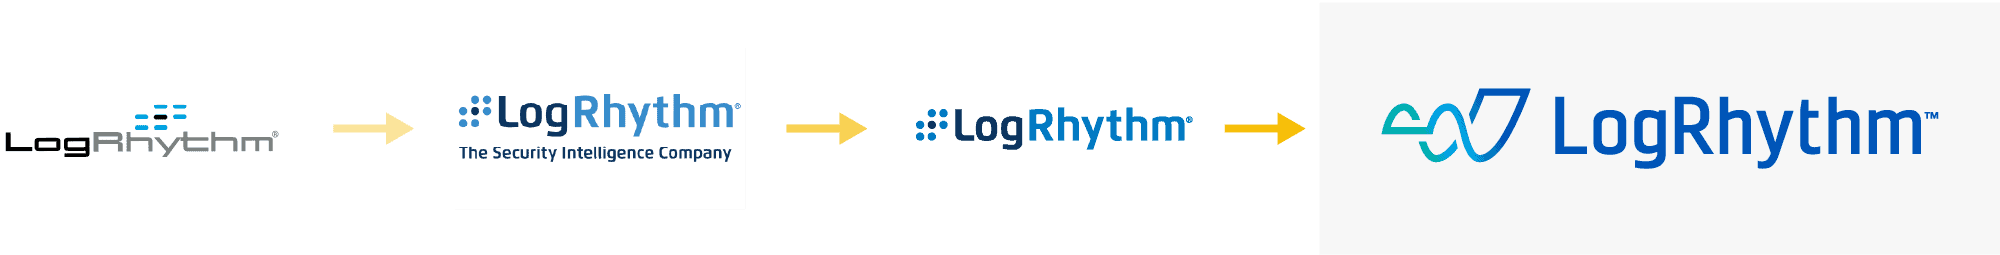 The evolution of LogRhythm's logo